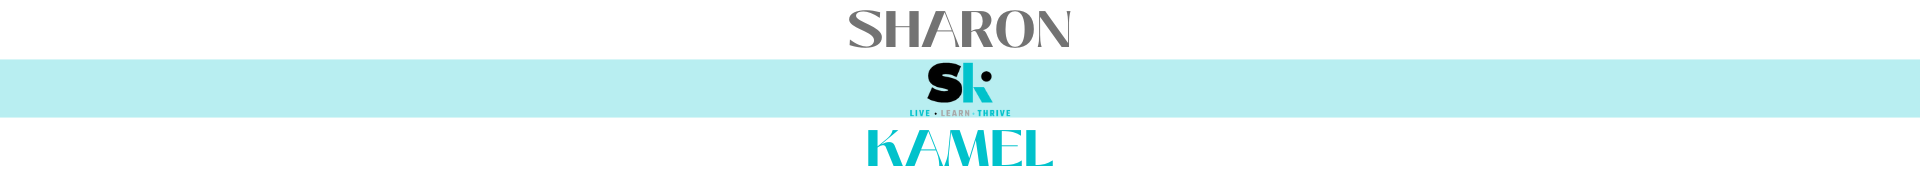 Sharon Kamel